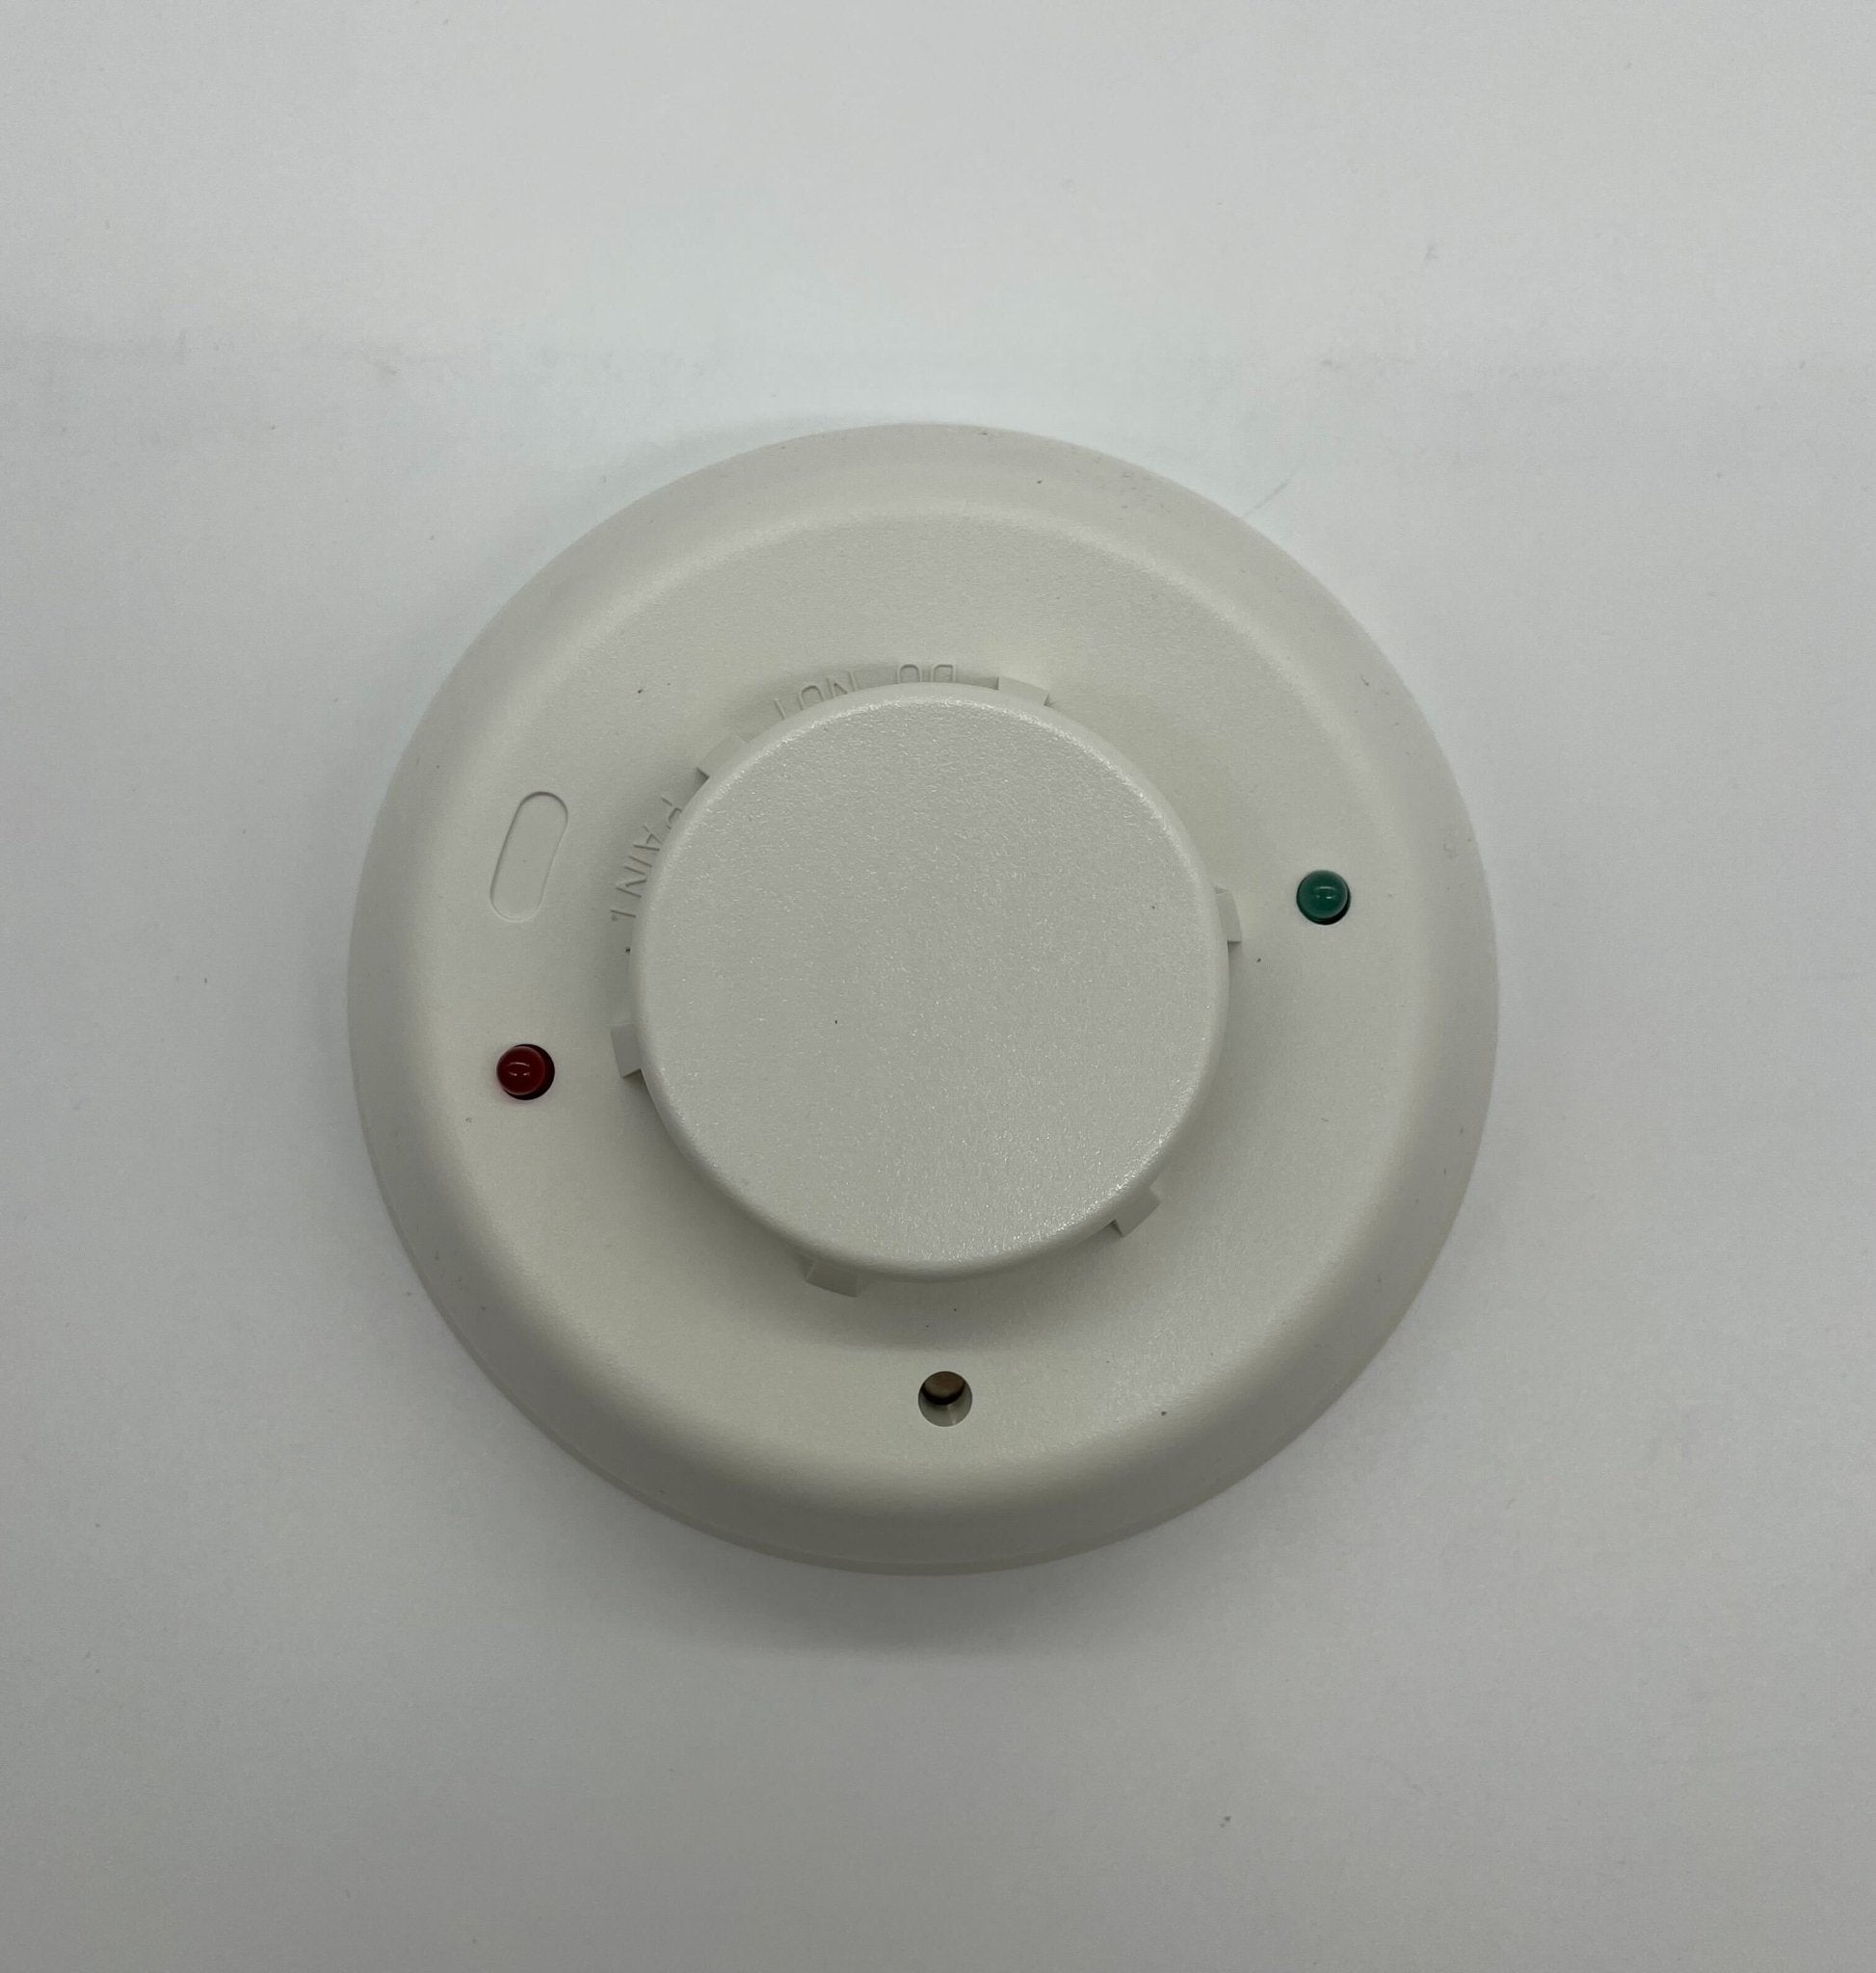 System Sensor 2WTR-B - The Fire Alarm Supplier